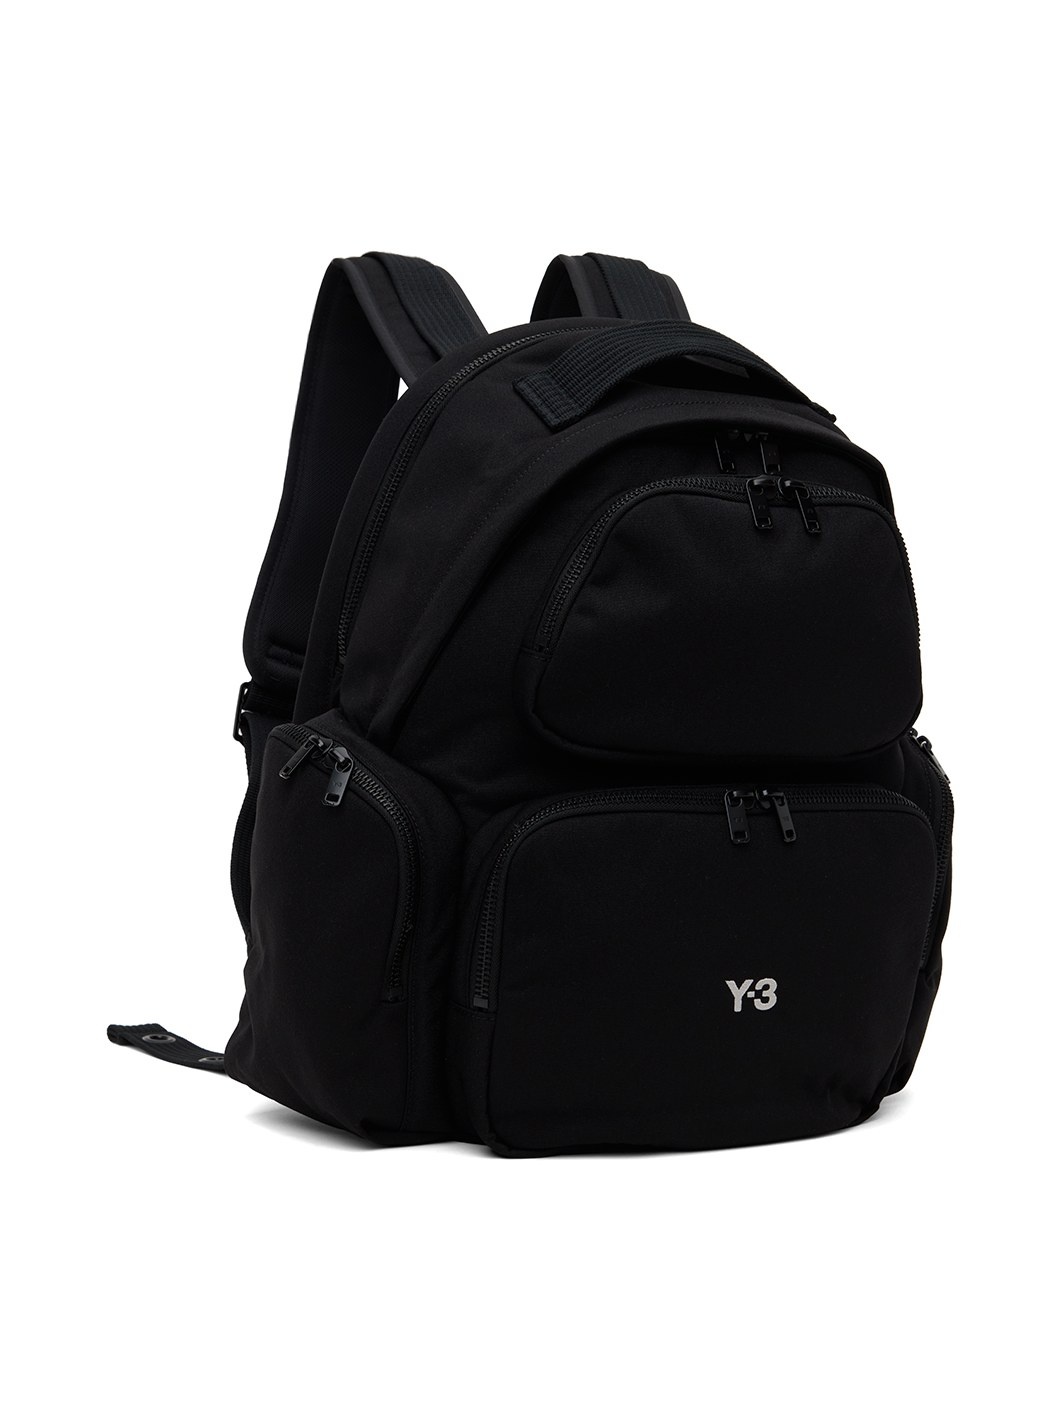 Black Canvas Backpack - 2